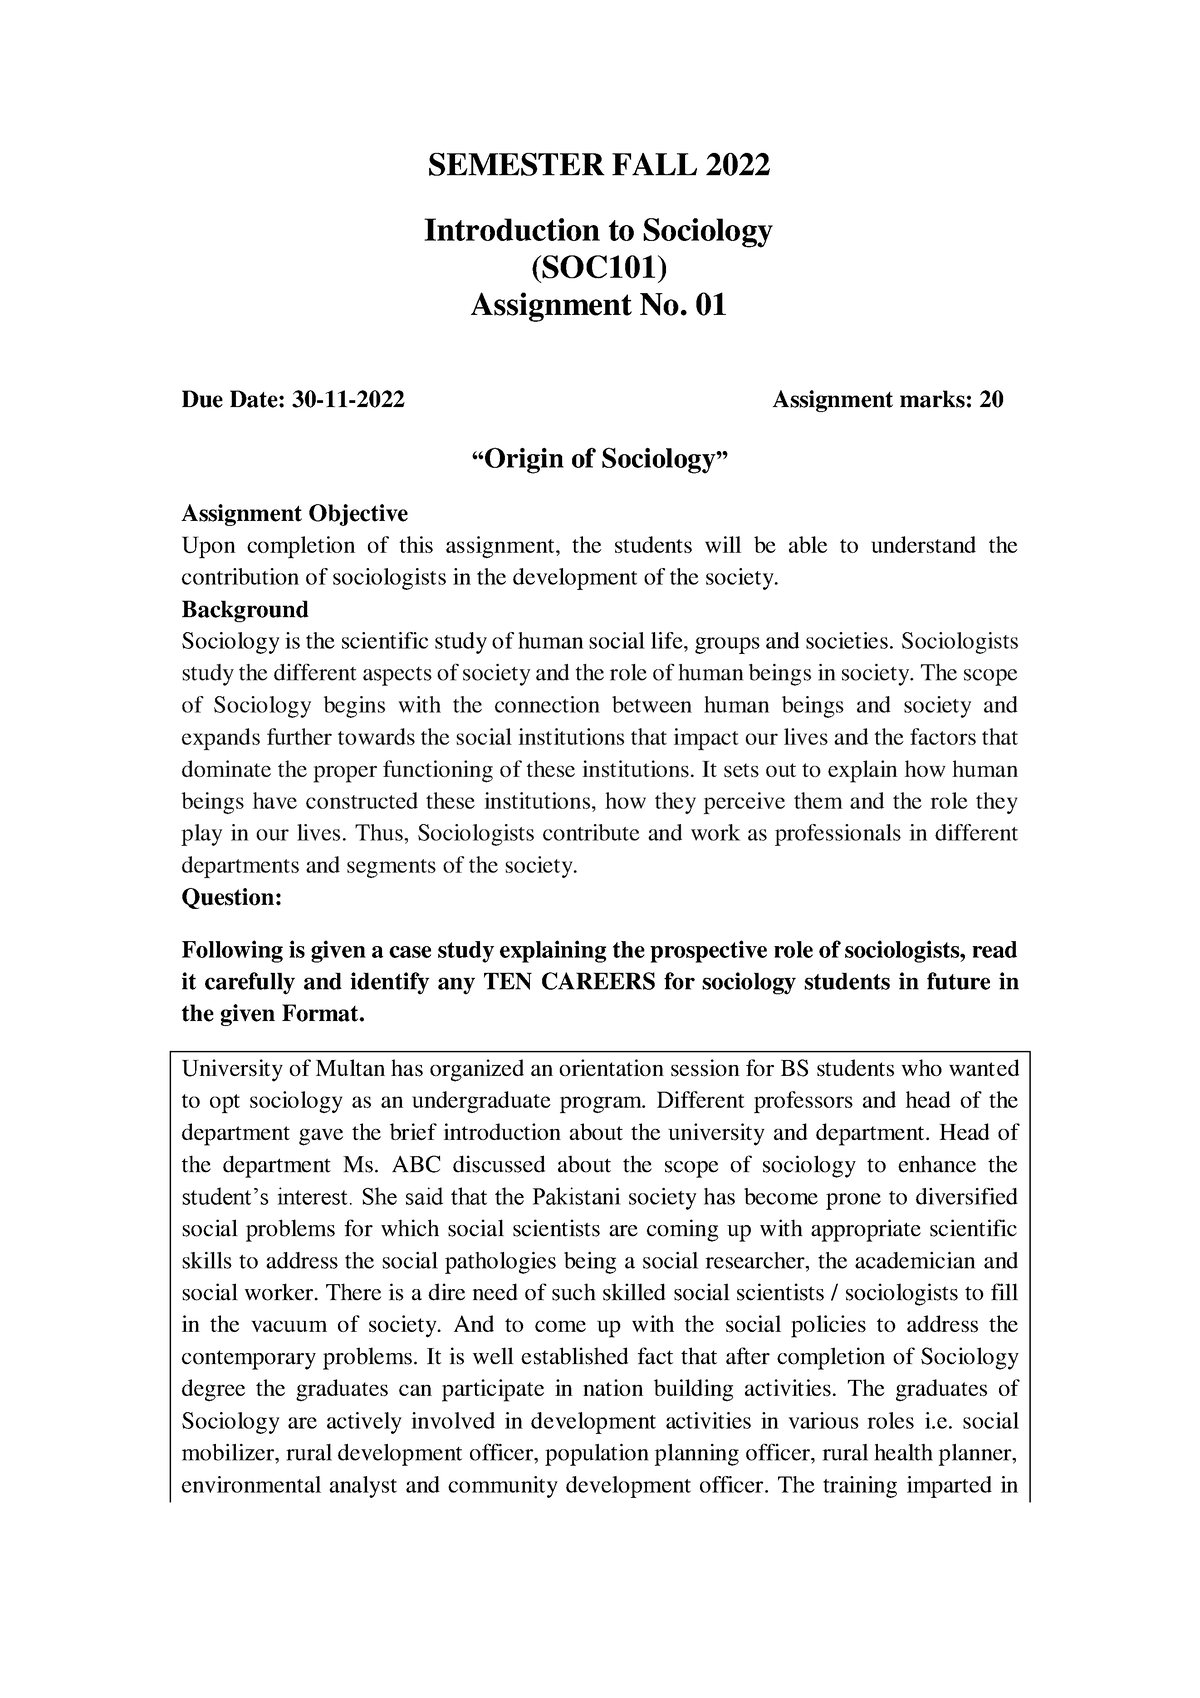 soc101 assignment 1 solution 2022 pdf